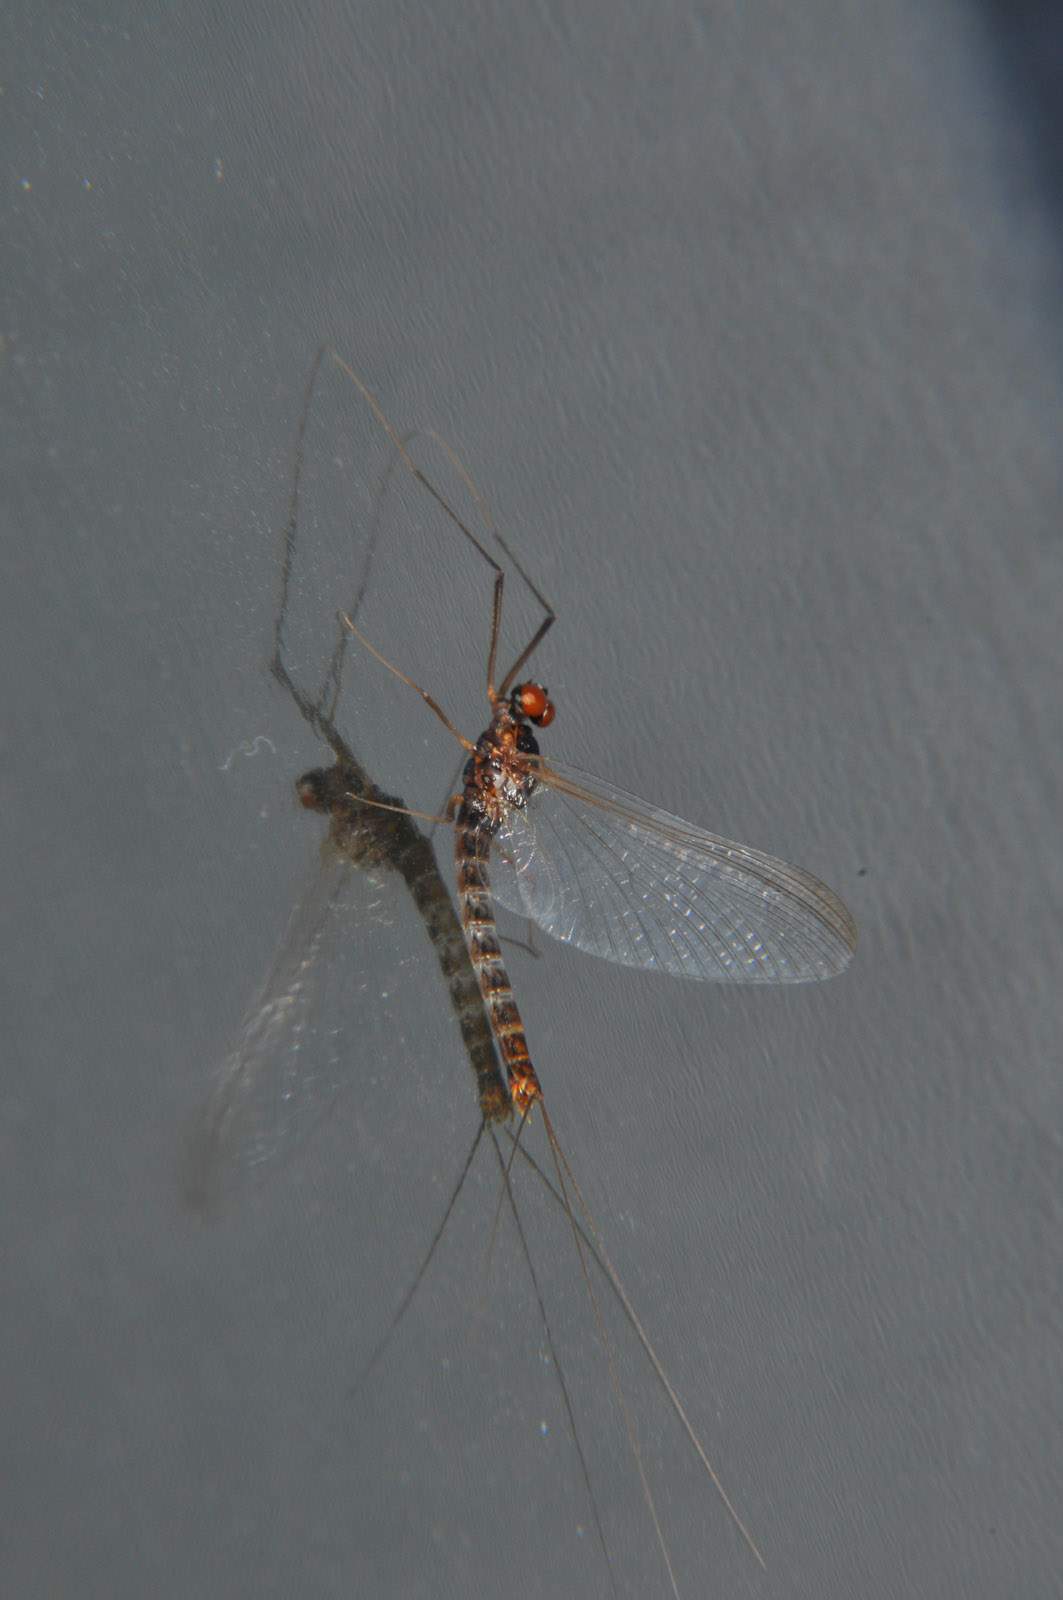 Male Paraleptophlebia bicornuta (Mahogany Dun) Mayfly Spinner from the Touchet River in Washington